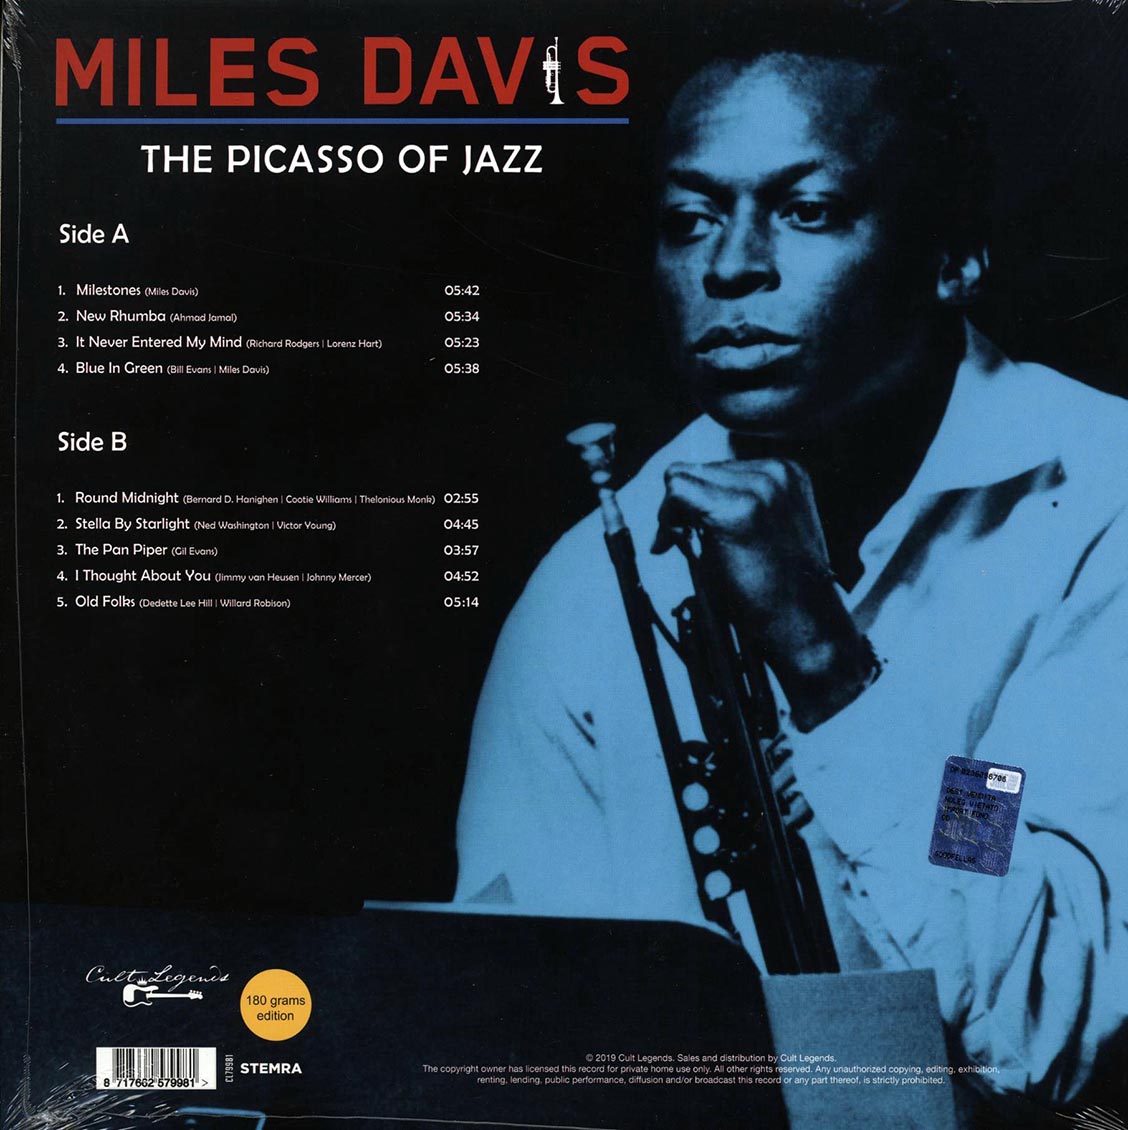 Miles Davis - The Picasso of Jazz [2019 Compilation 180G] [New Vinyl Record LP]